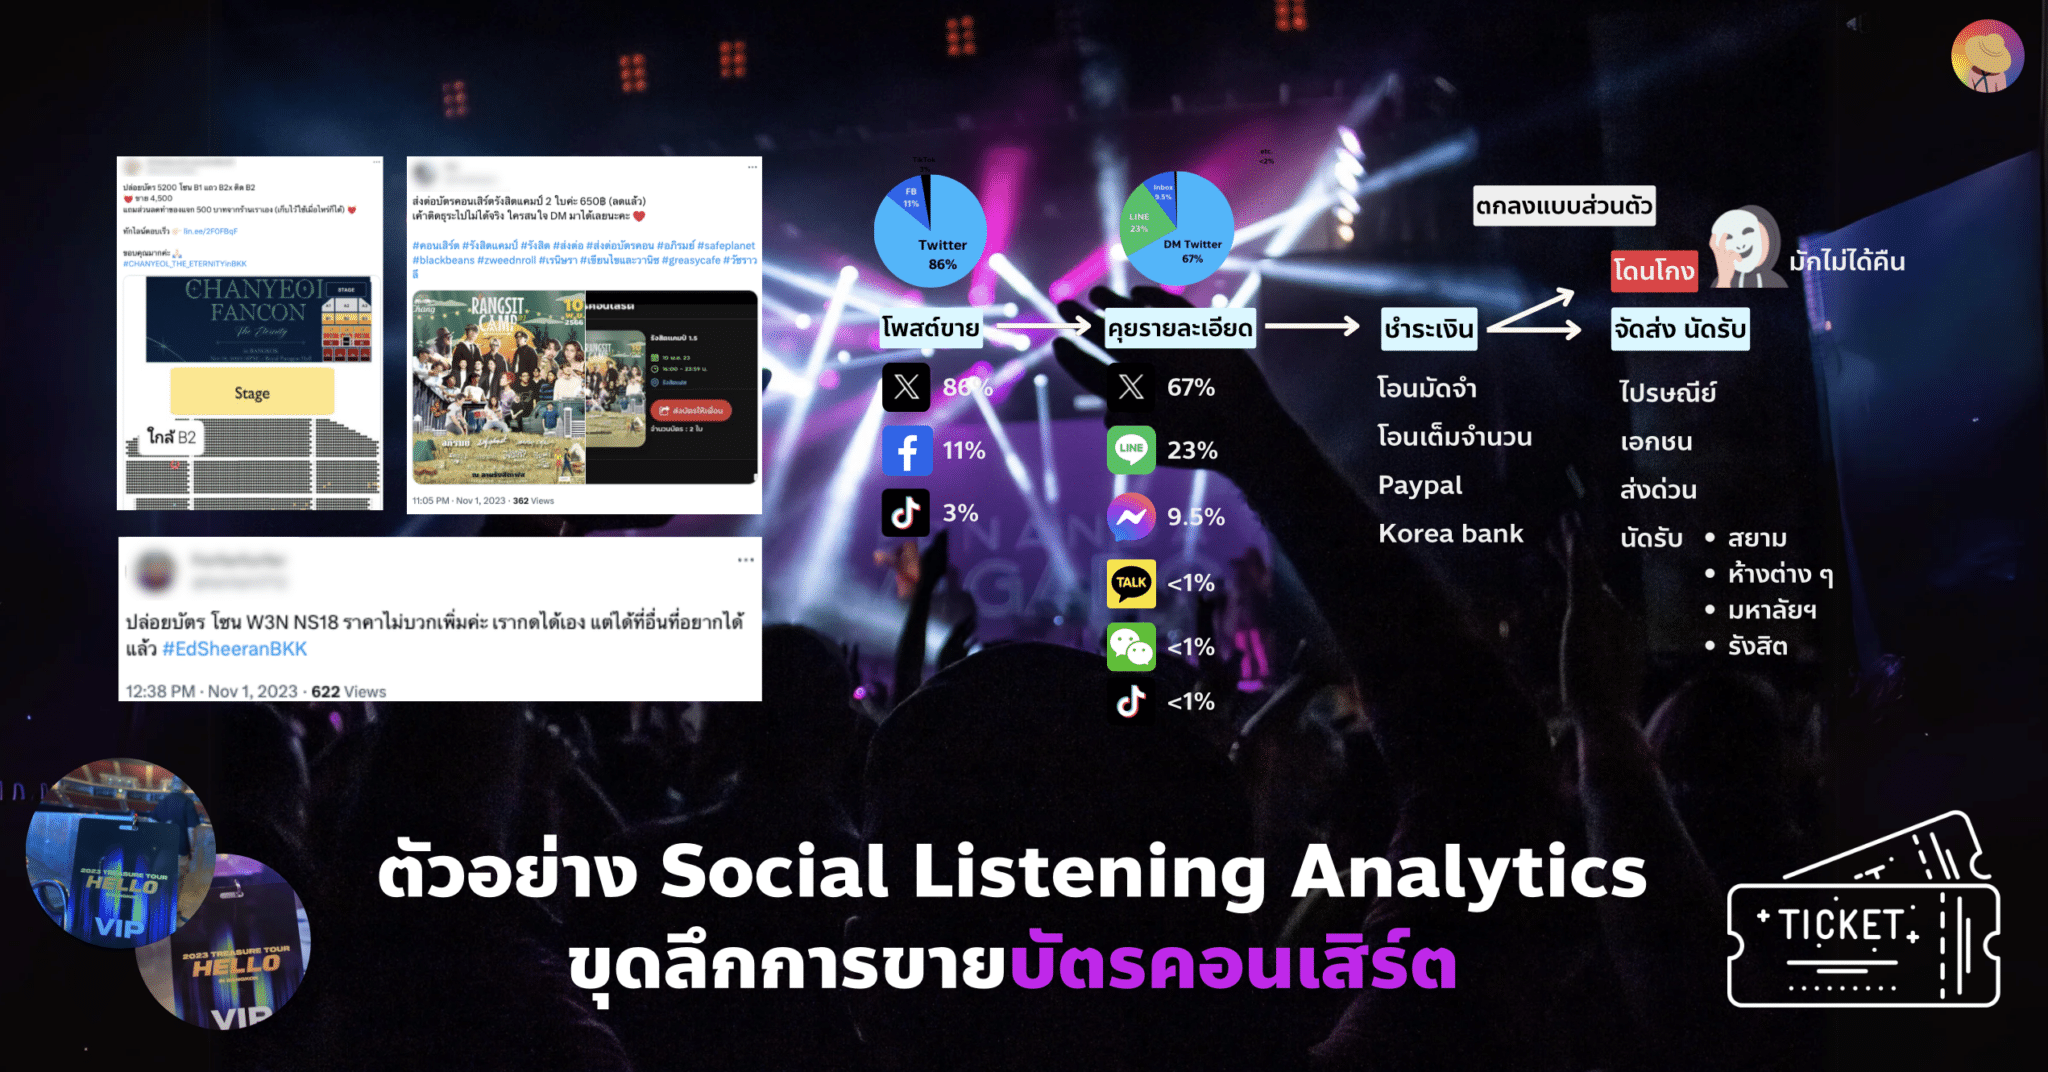 Social Listening Analytics ขายบัตรคอนเสิร์ต โพสต์แบบไหน ใช้คีย์เวิร์ดอะไร